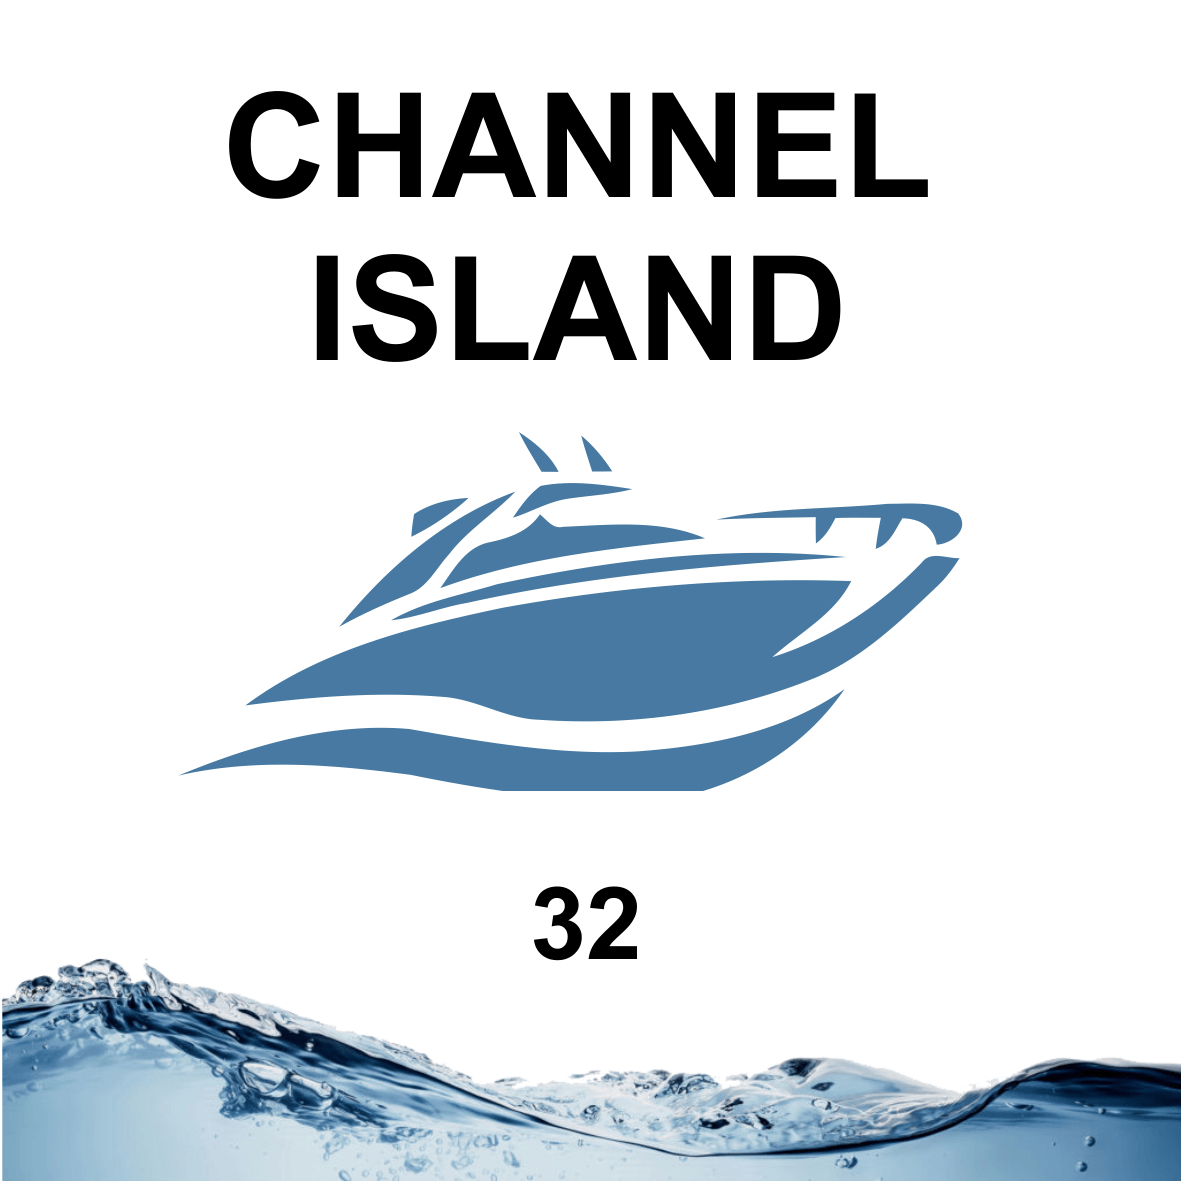 Channel Island 32